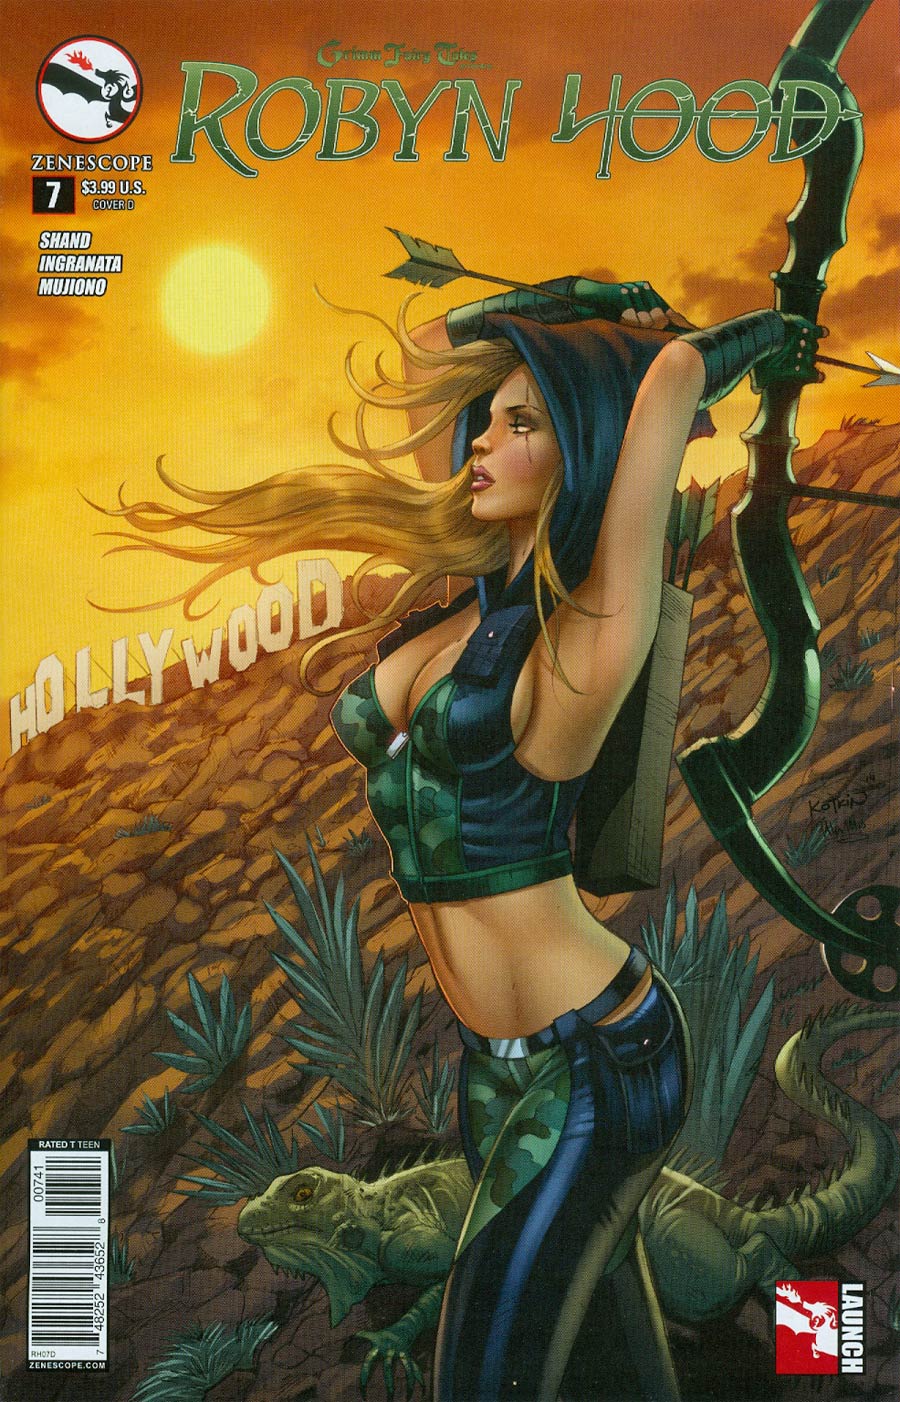 Grimm Fairy Tales Presents Robyn Hood Vol 2 #7 Cover D Alex Kotkin Hollywood